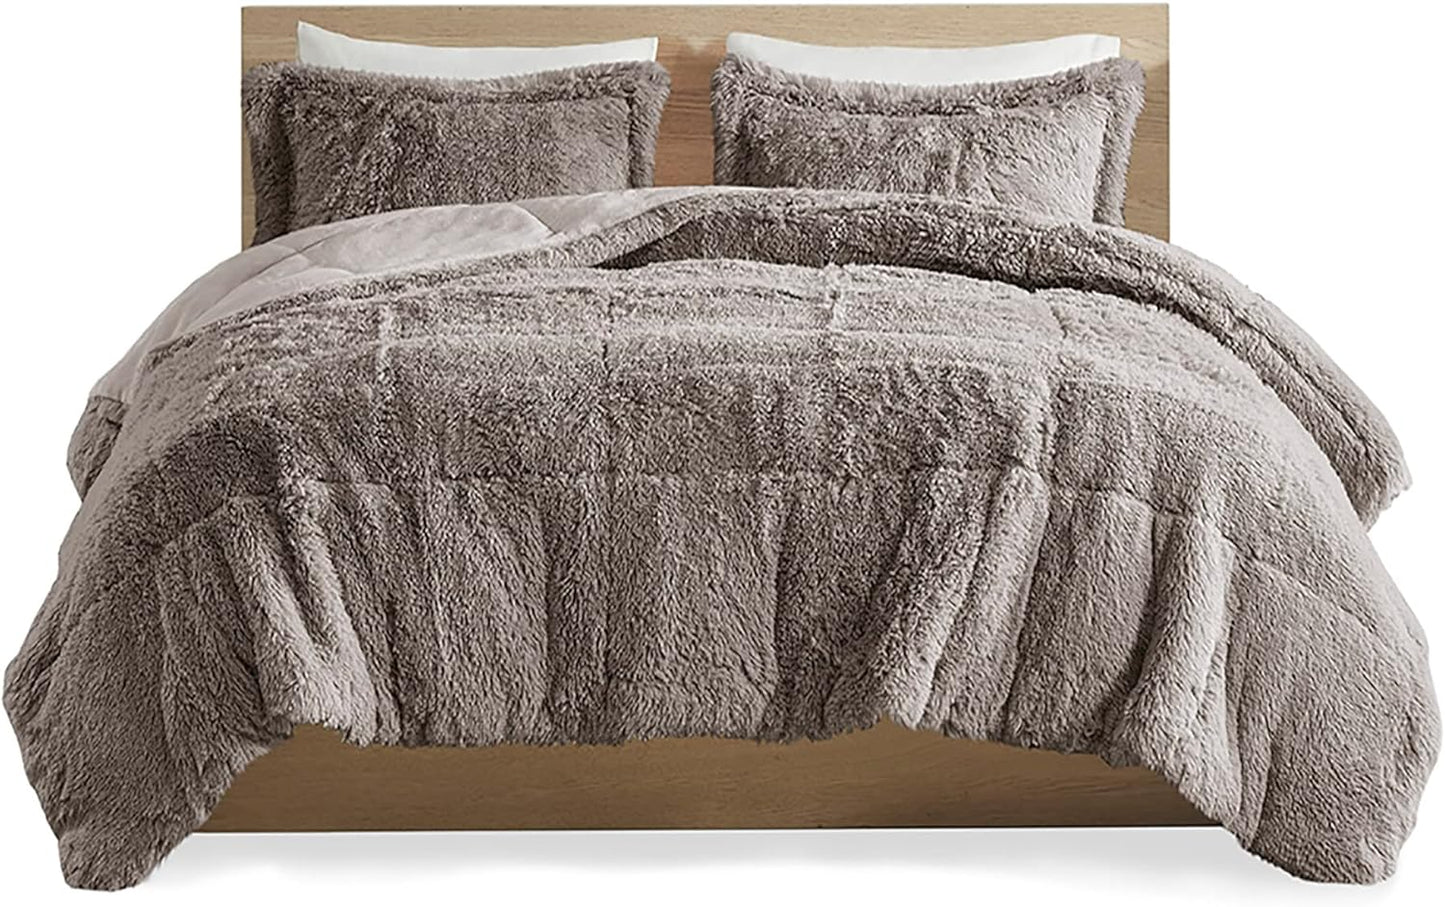 Malea Shaggy Comforter Set, Long Faux Fur Cozy down Alternative, Modern Casual Ultra Soft All Season Fluffy Bedding with Matching Sham, King/Cal King, Grey 3 Piece